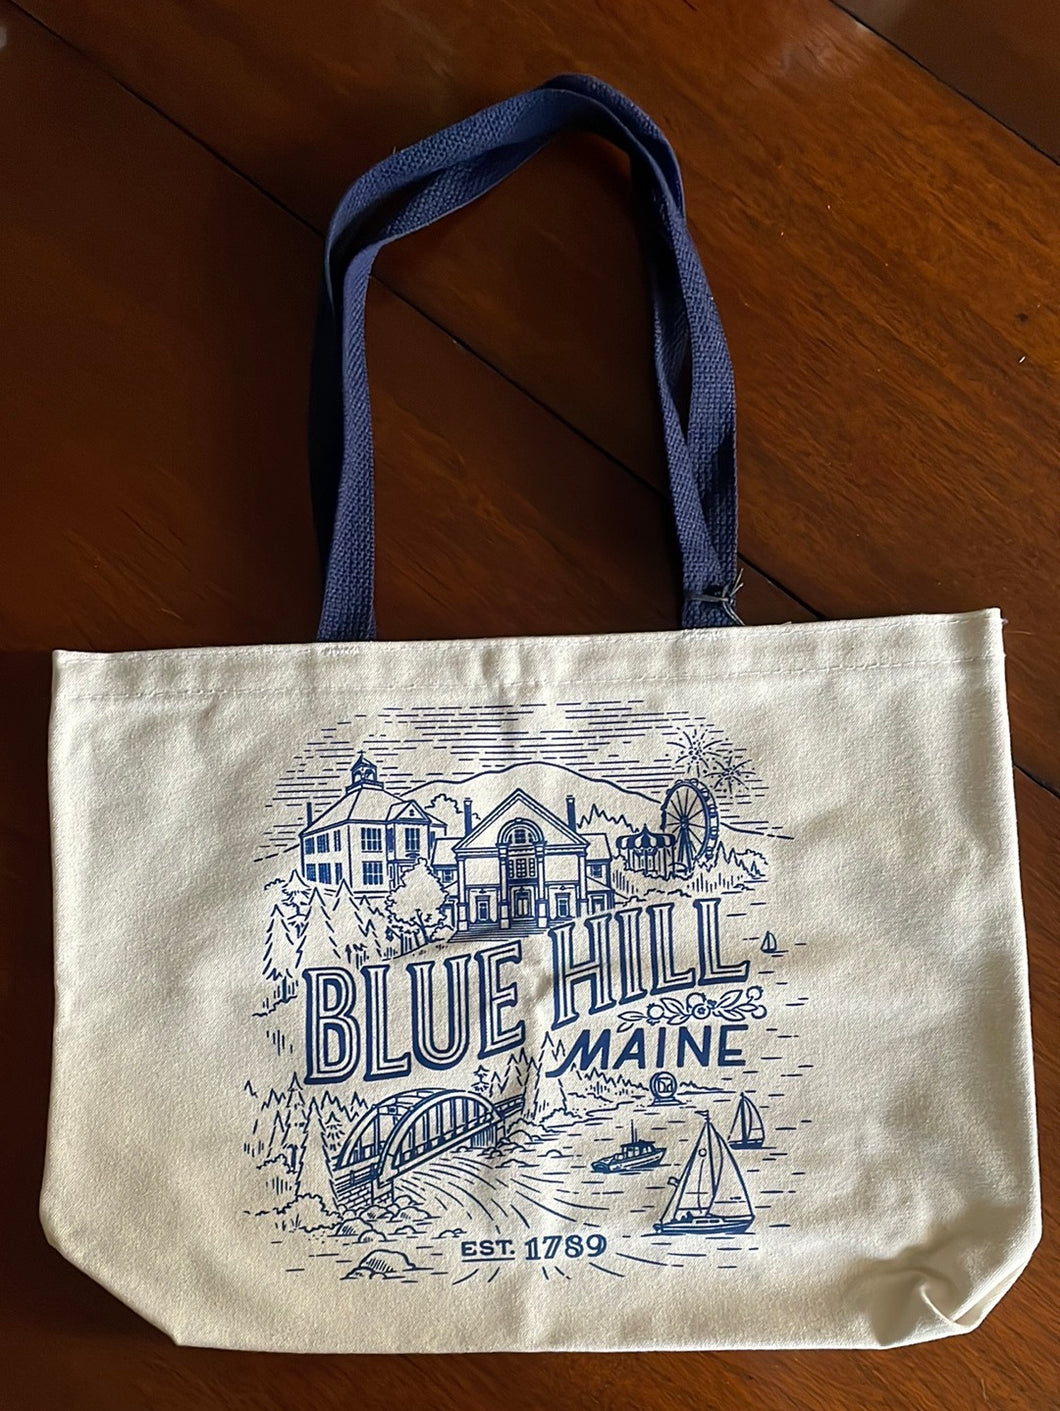 Blue Hill Tote Bag